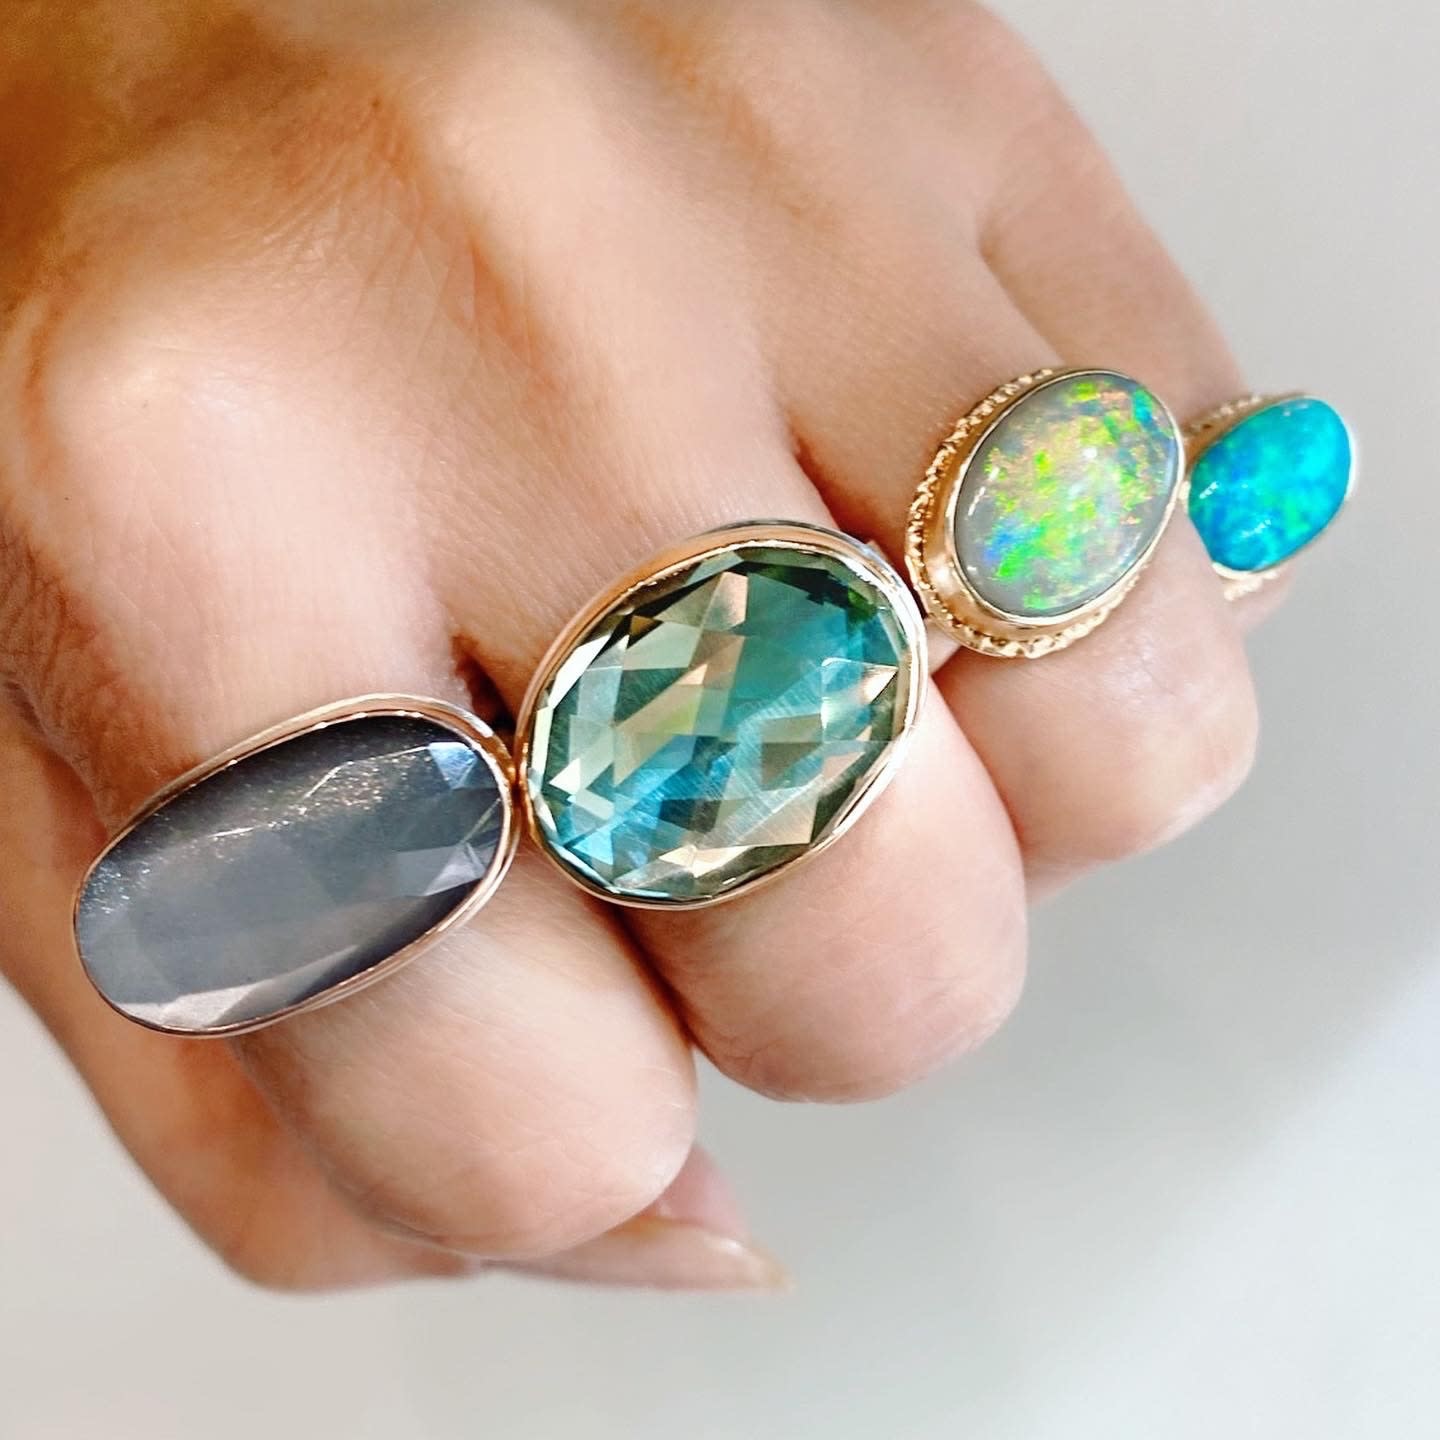 Jamie Joseph Jewelry Designs Oval Crystal Opal Bezel Ring